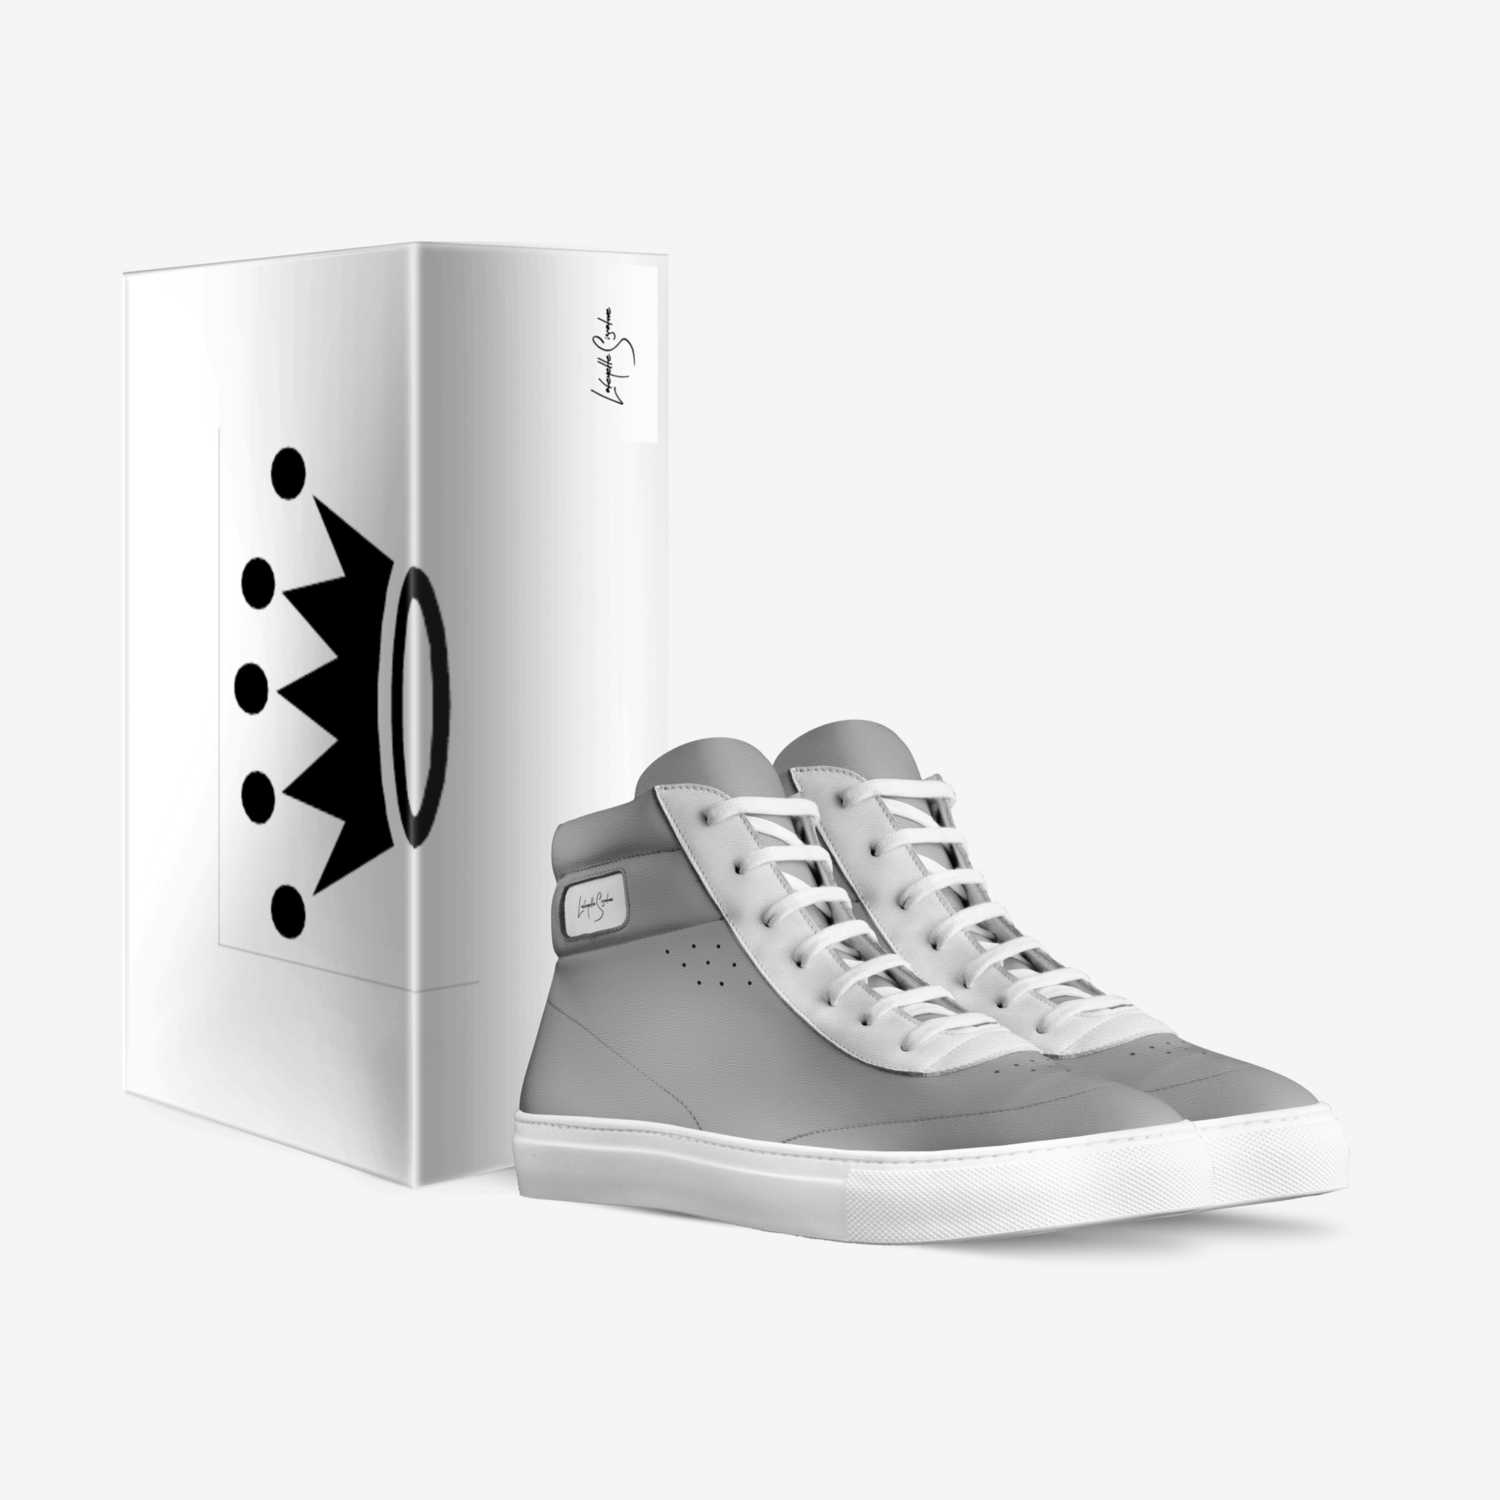 Mansa Cortex custom made in Italy shoes by Raqeeb Ivey | Box view